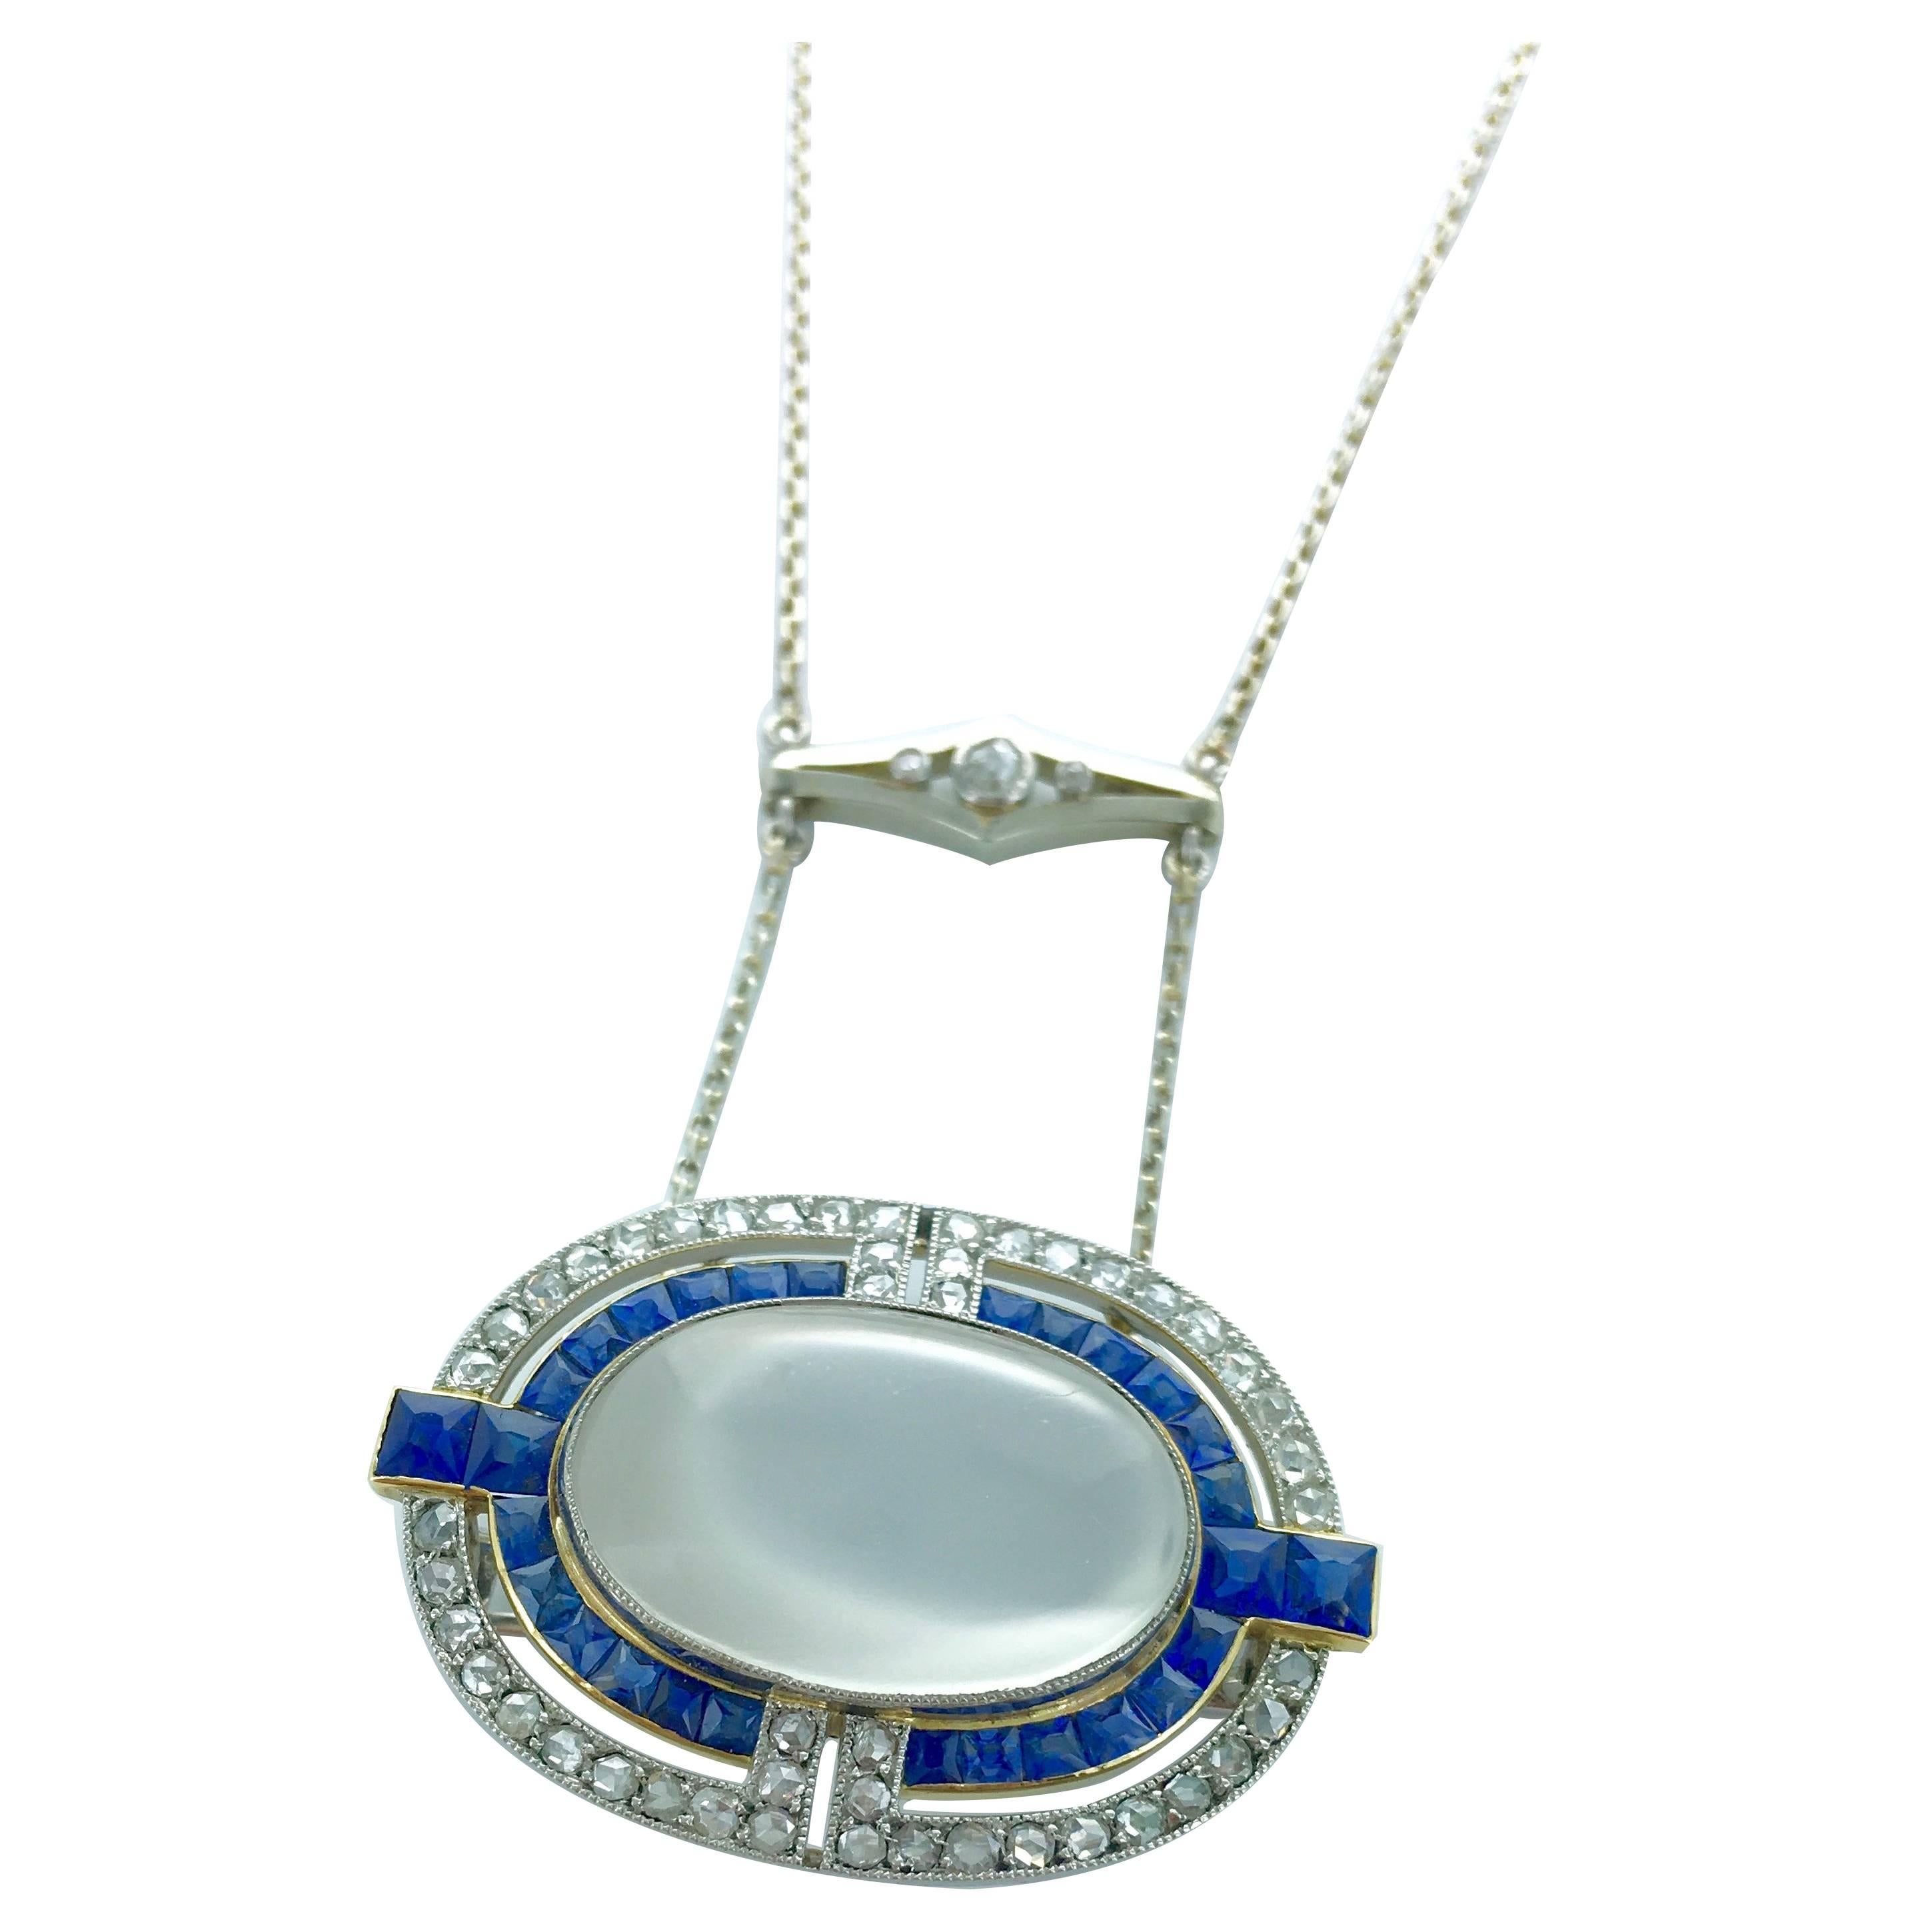 1915 Cartier Art Deco Moonstone Diamond Sapphire Brooch Necklace